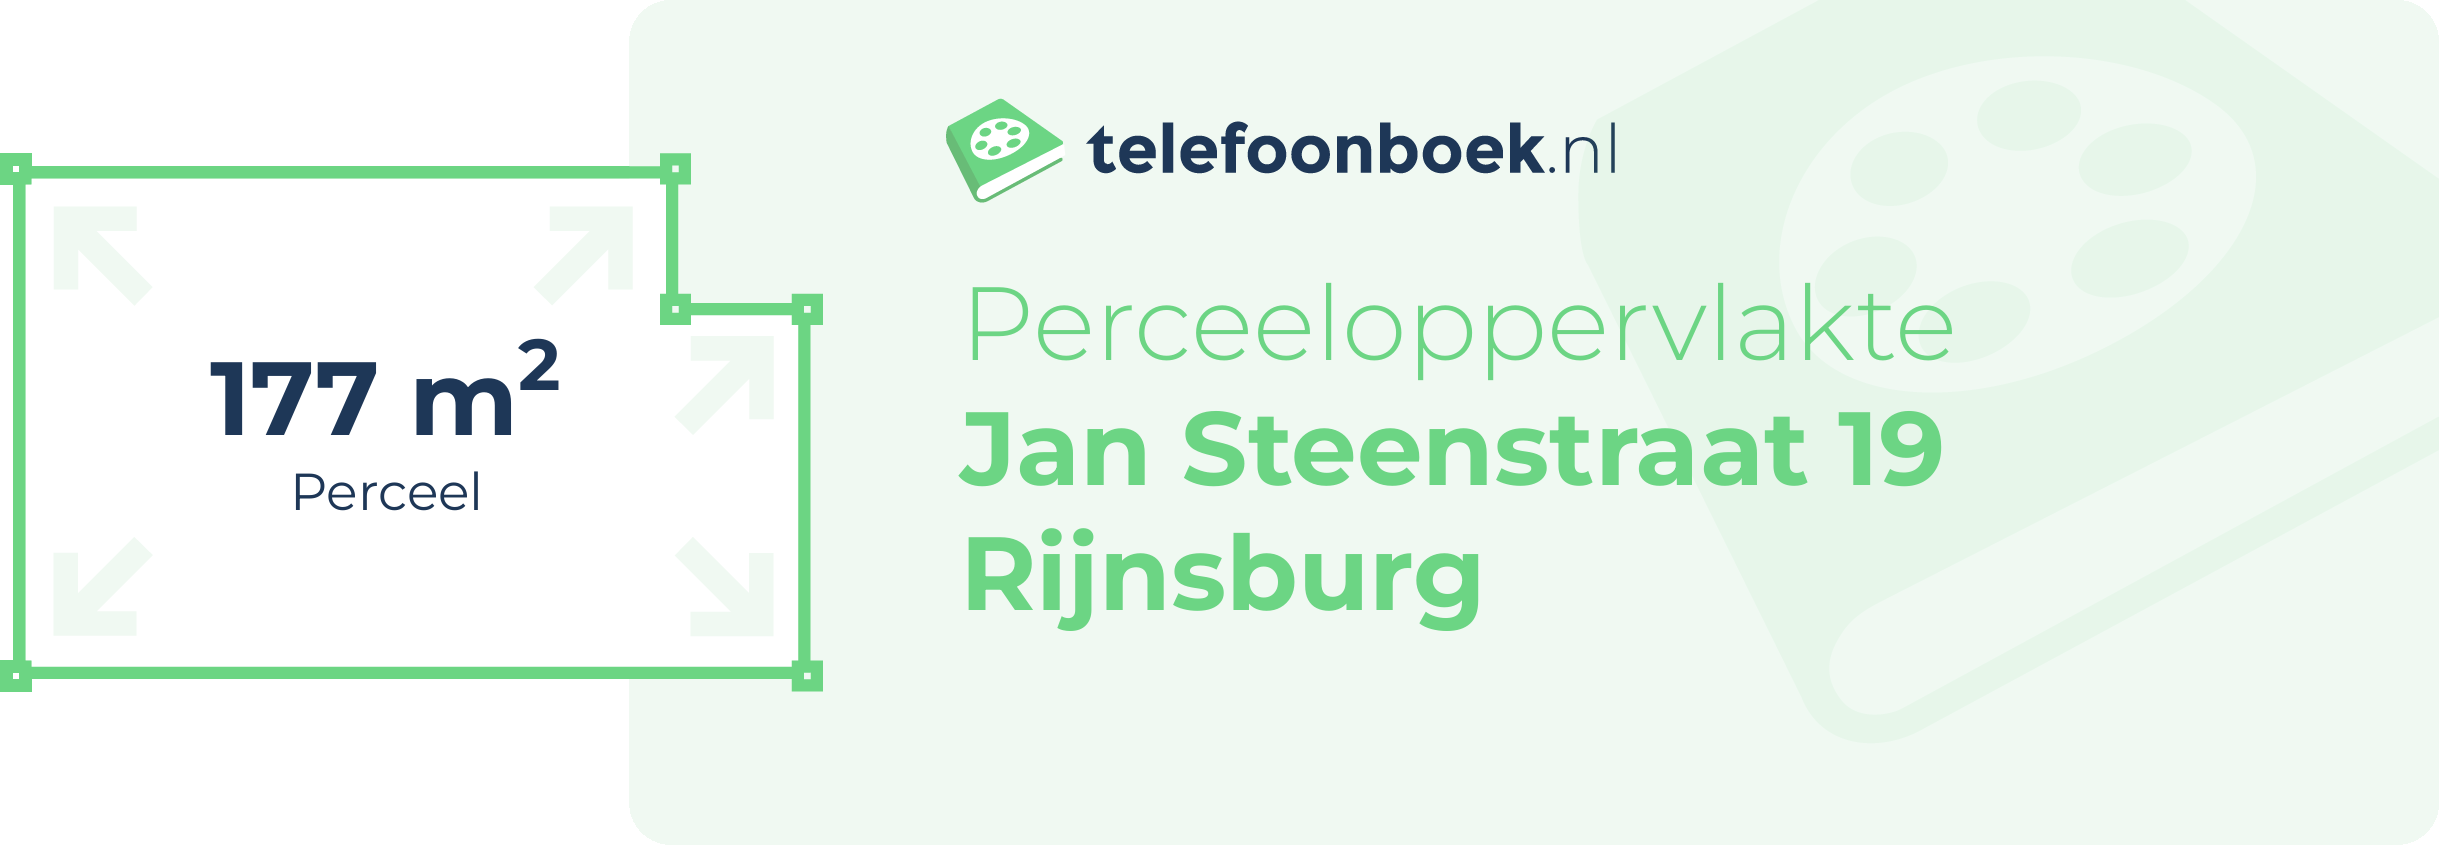 Perceeloppervlakte Jan Steenstraat 19 Rijnsburg